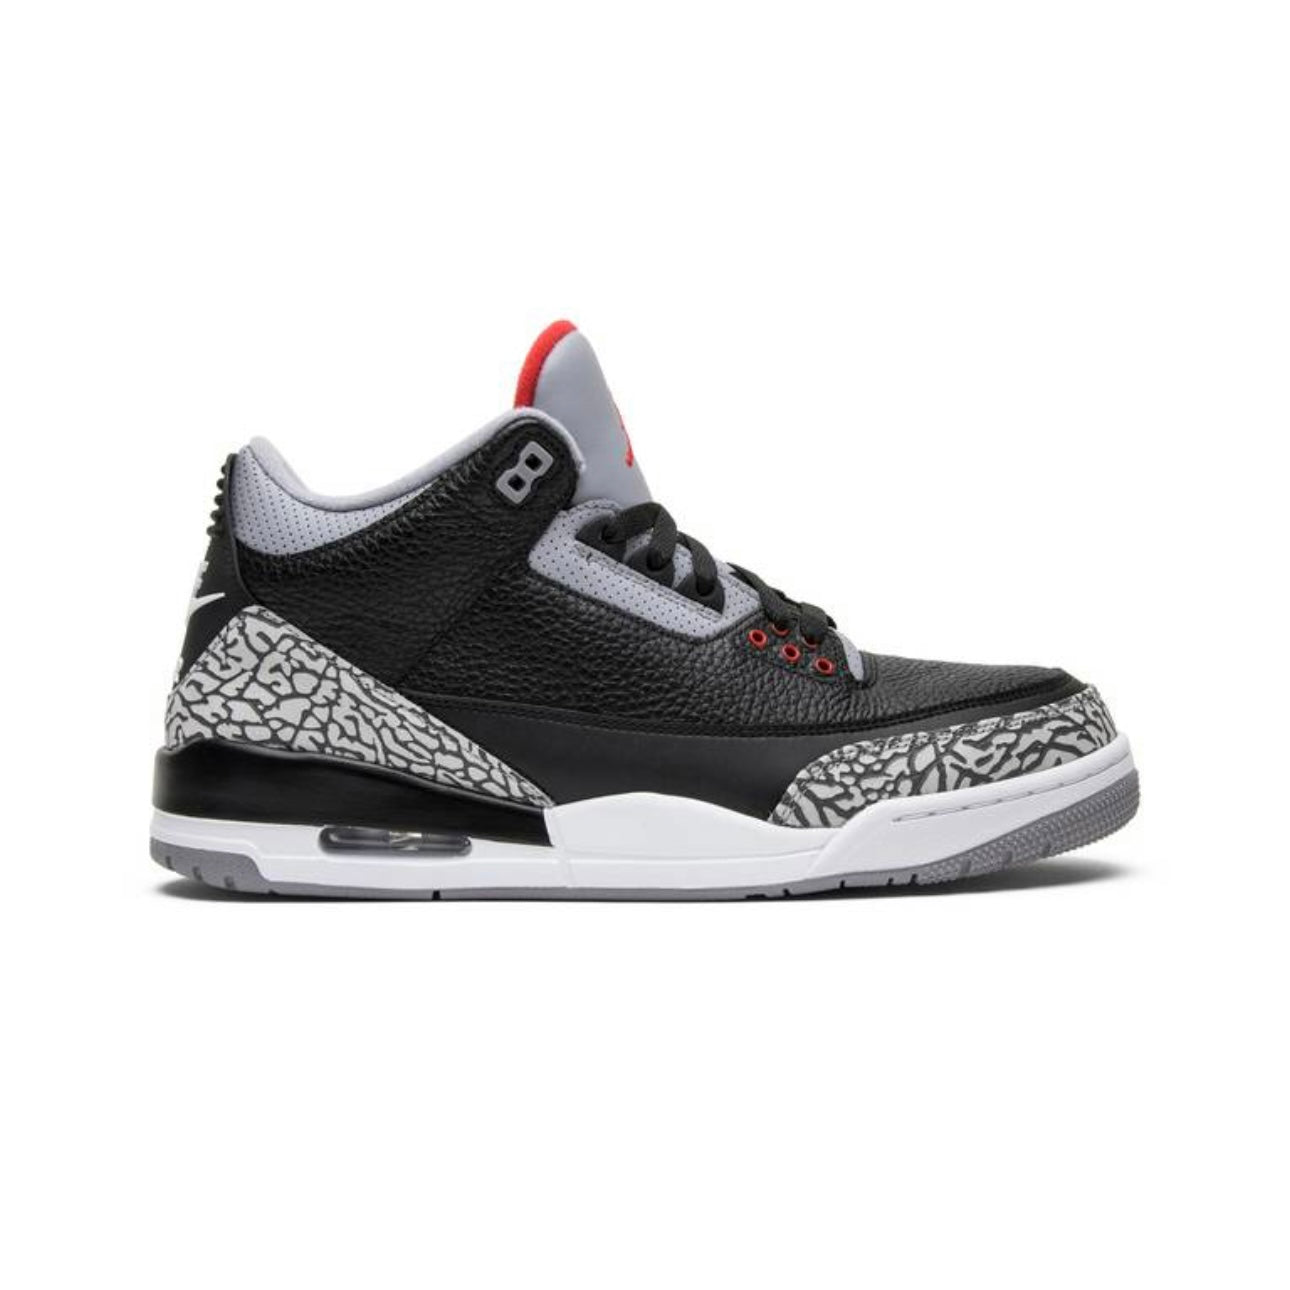 Size 13 - Air Jordan Retro 3 "Cement”